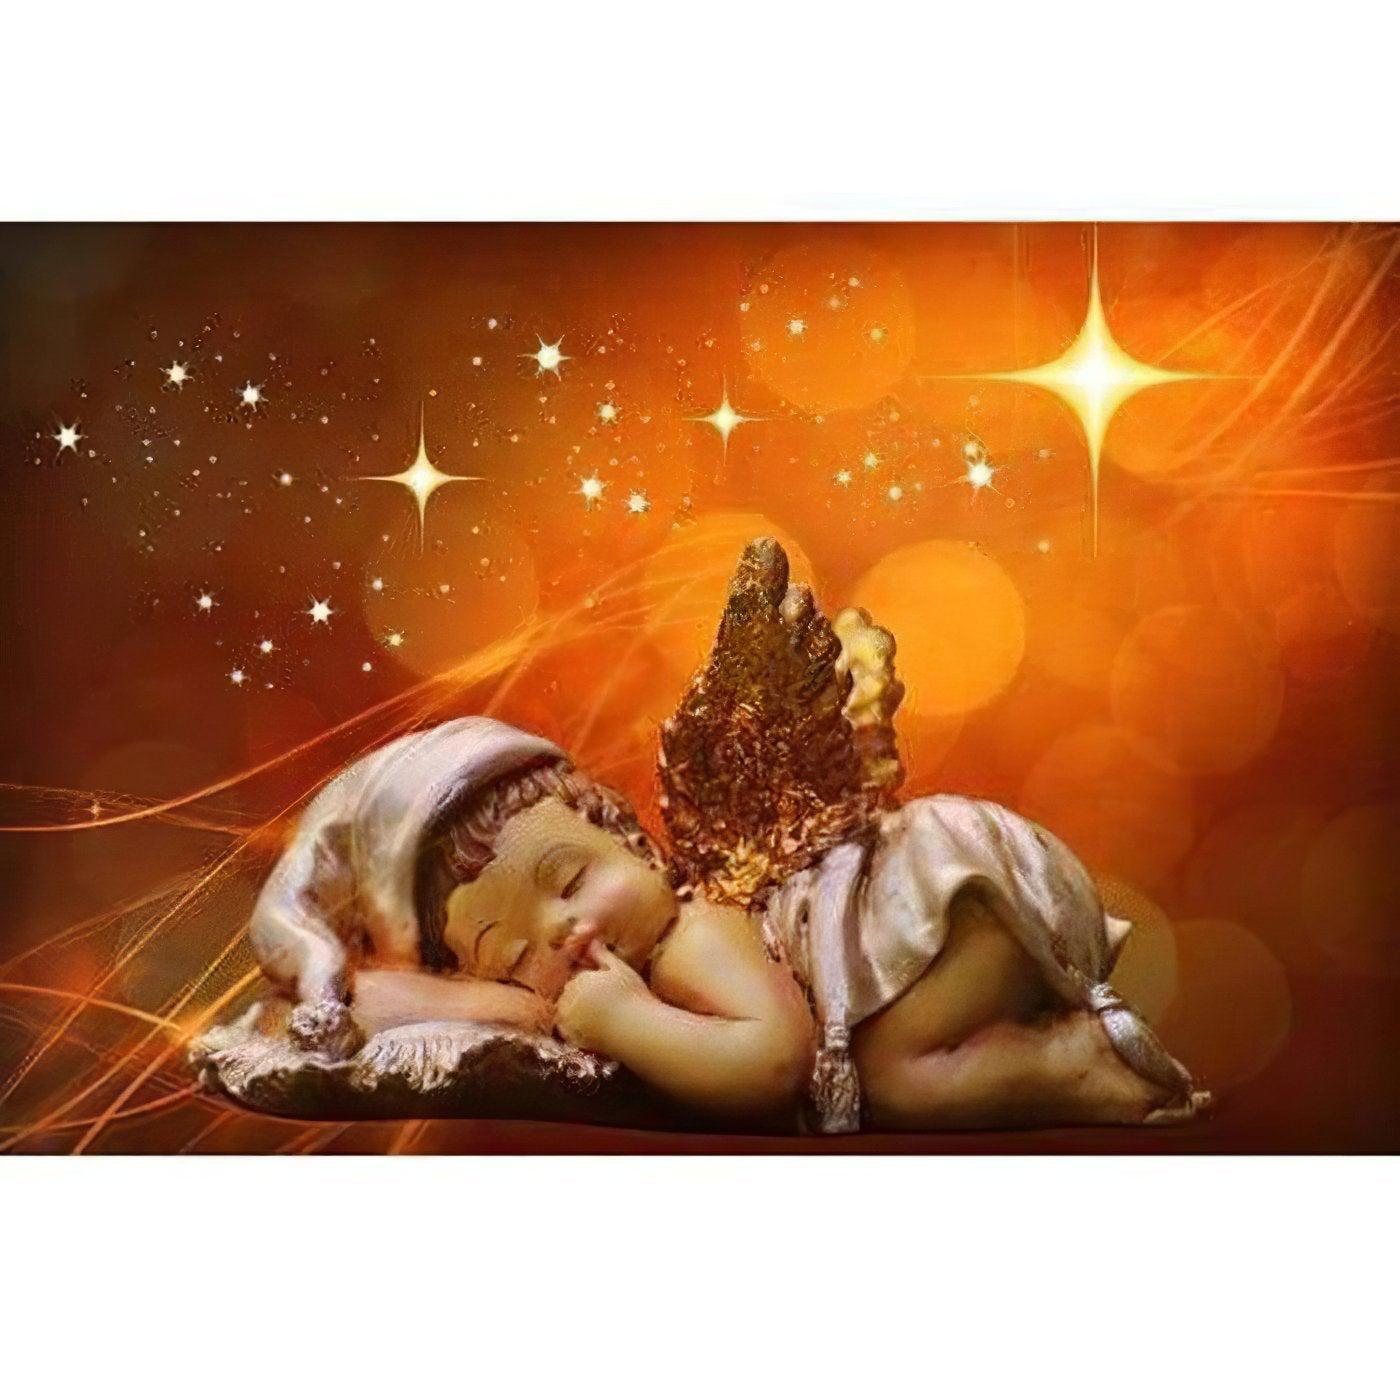 A Christmas angel bringing peace and joy, symbol of the festive season's blessings and hope. Christmas Angel - Diamondartlove